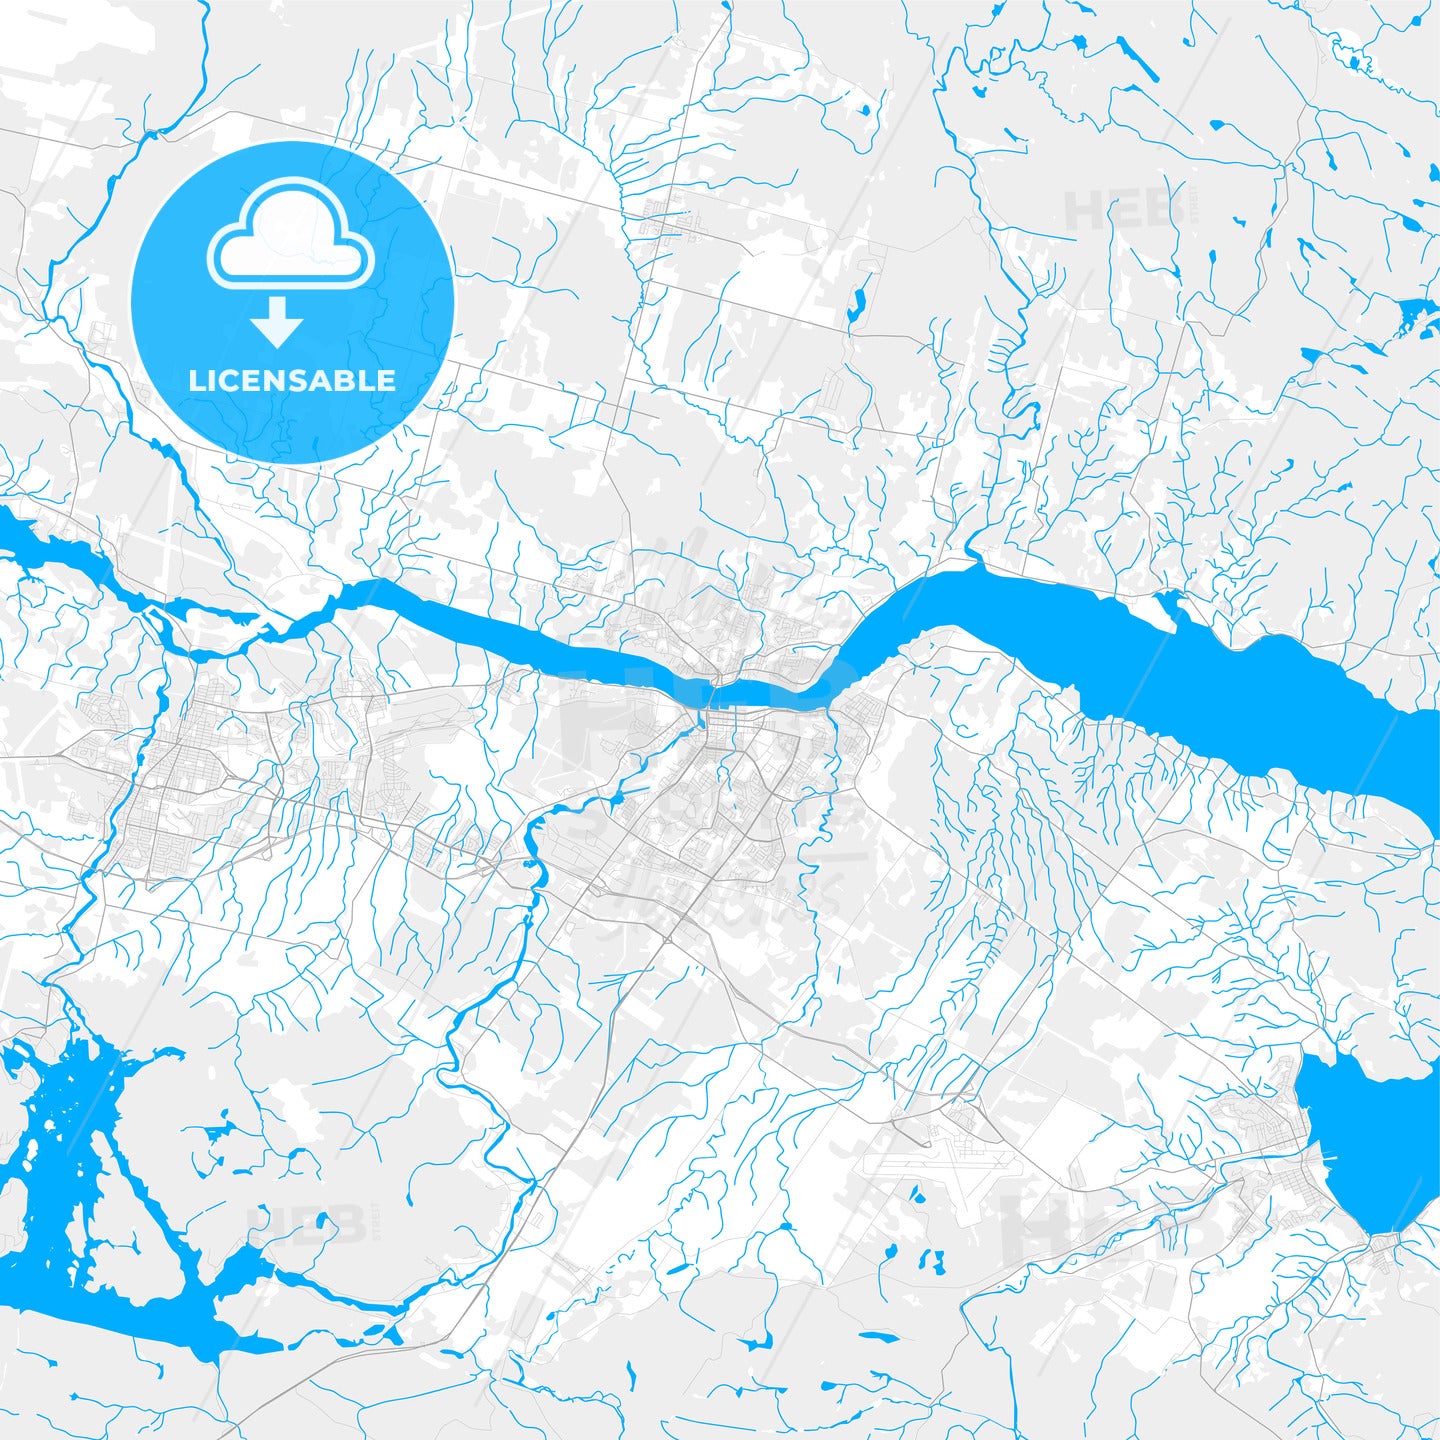 Rich detailed vector map of Saguenay, Quebec, Canada